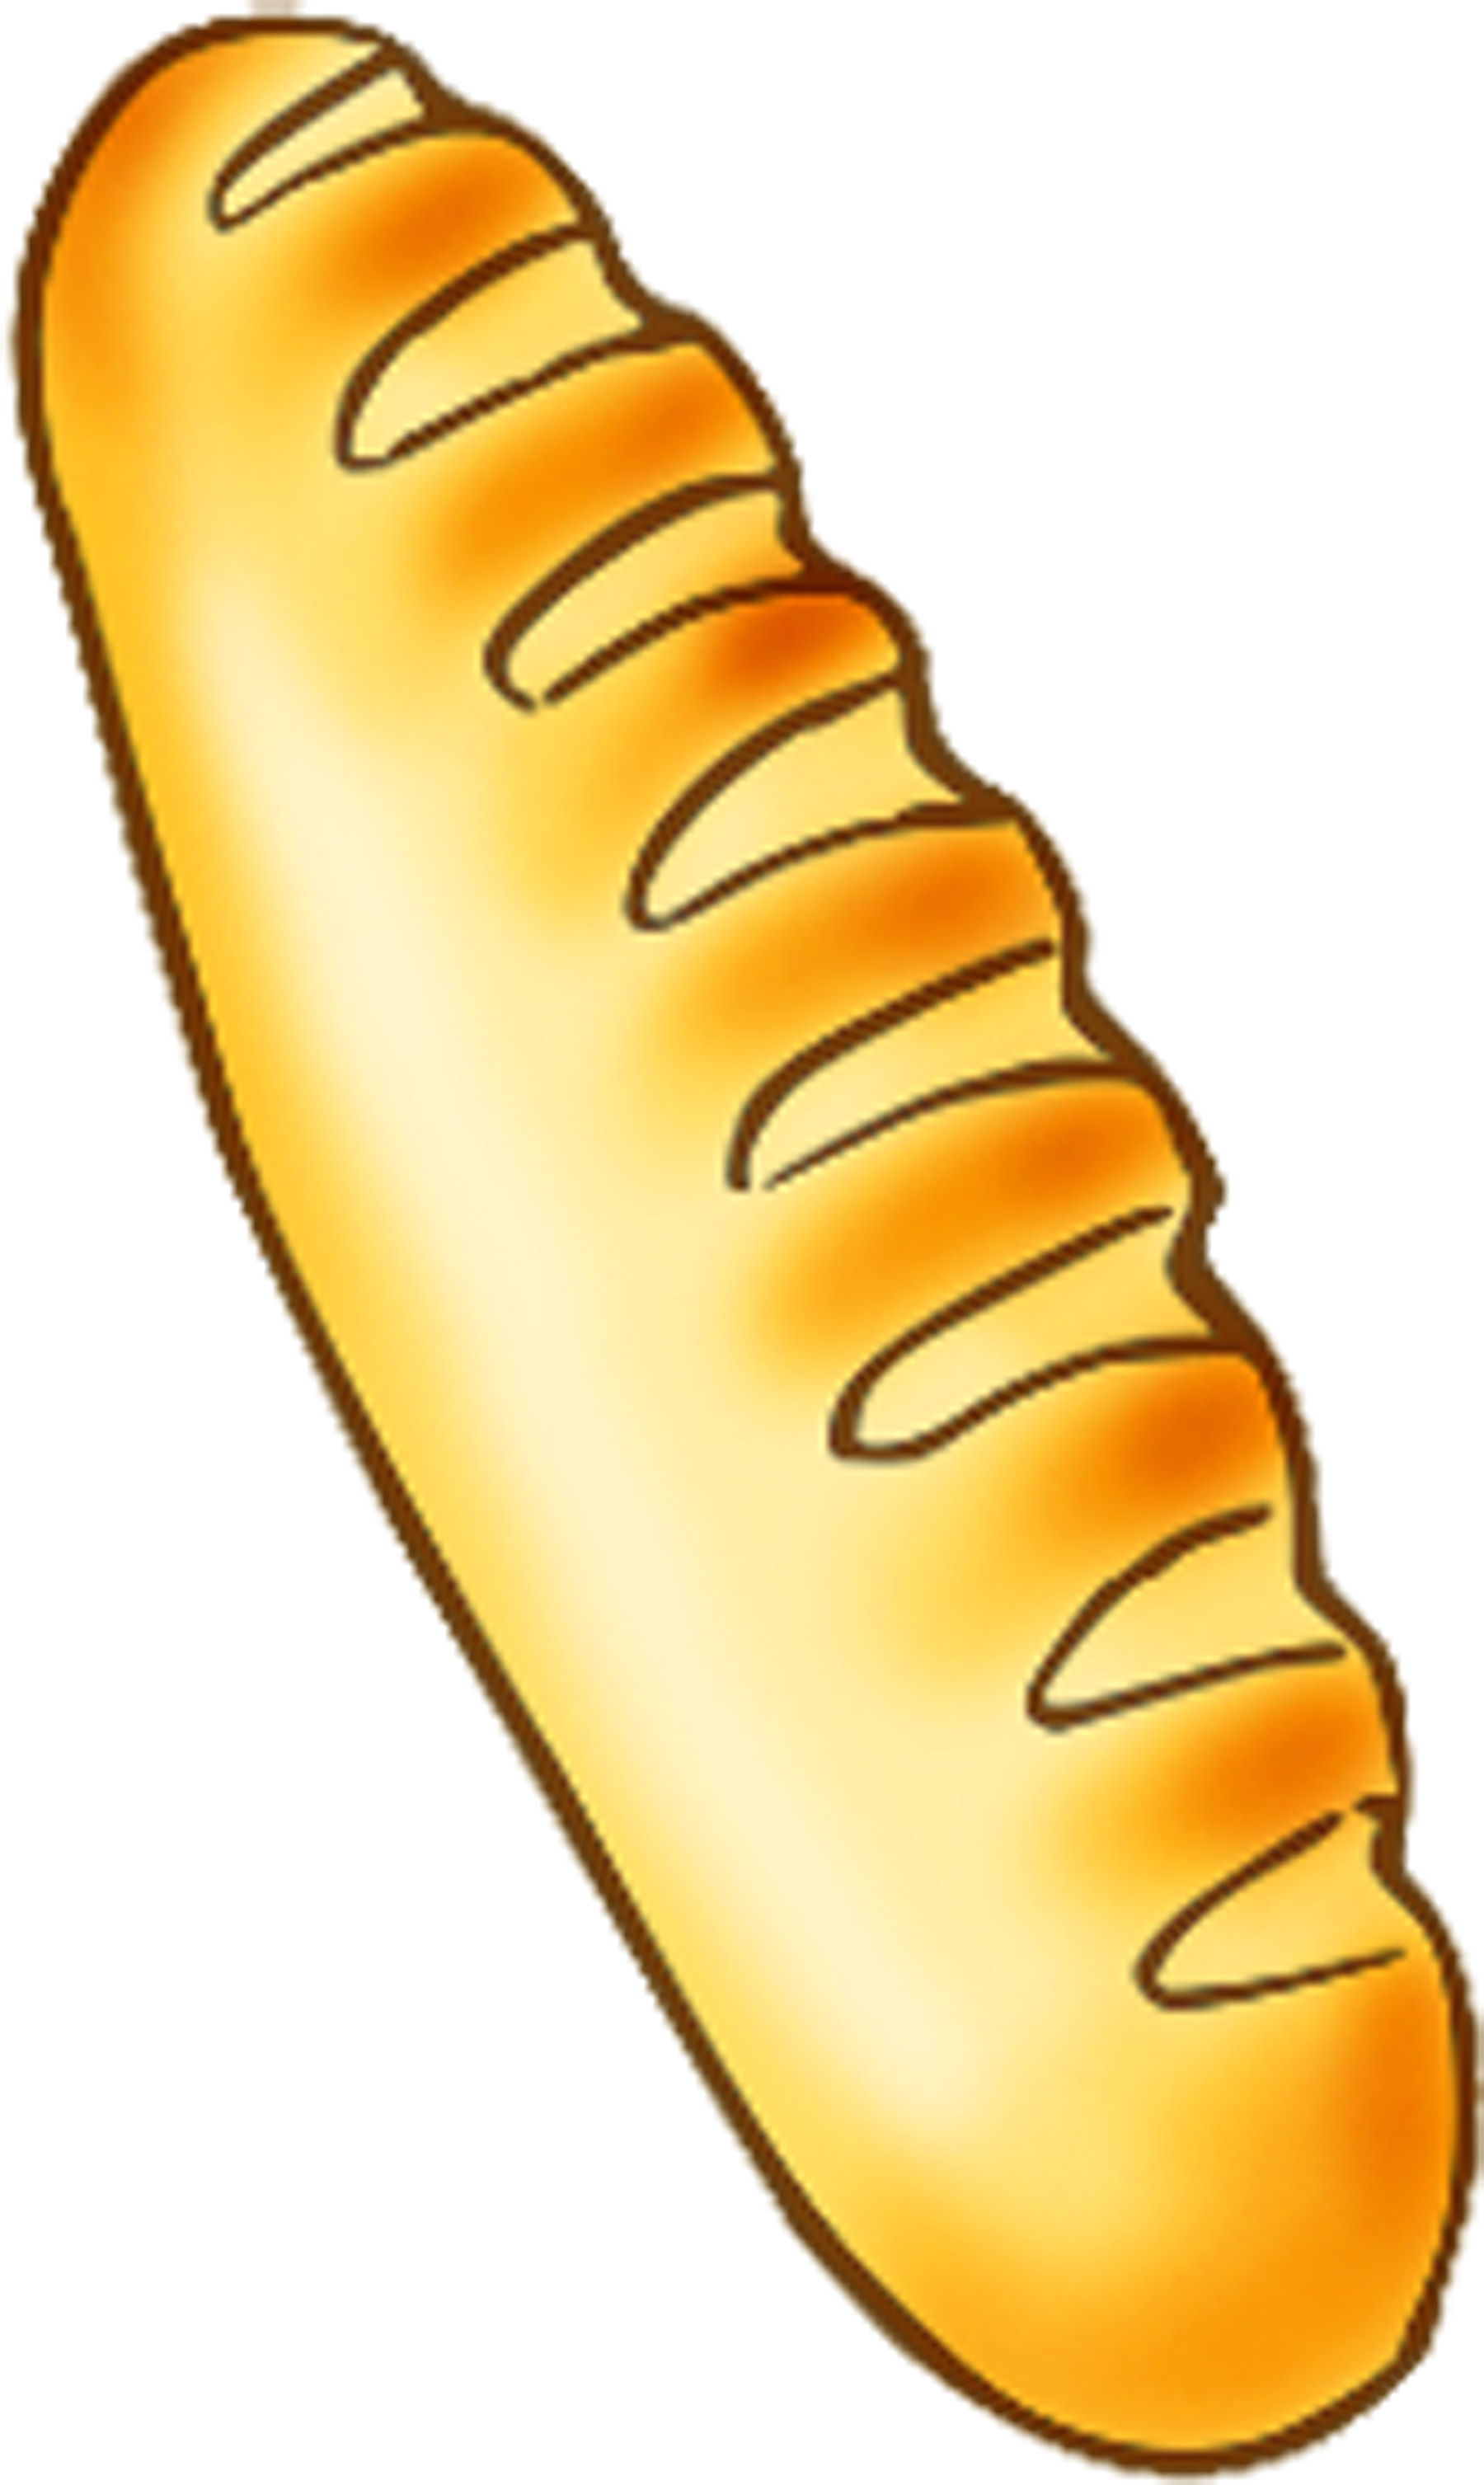 Bread clip art free download clipart - Clipartix